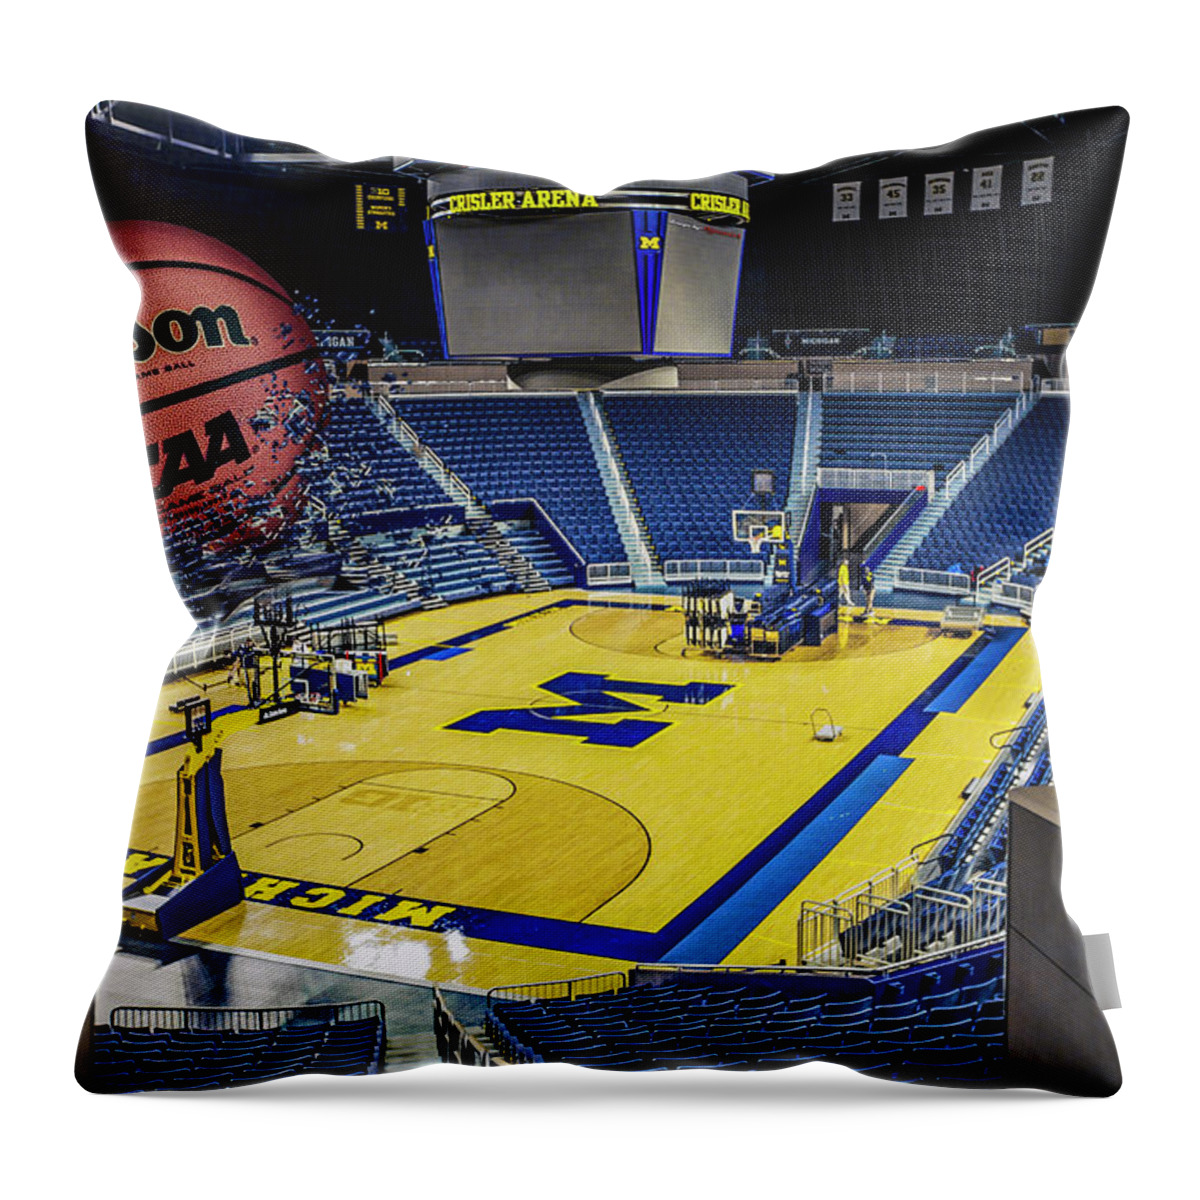 University Of Michigan Basketball Throw Pillow featuring the digital art University of Michigan Basketball by Nicholas Grunas